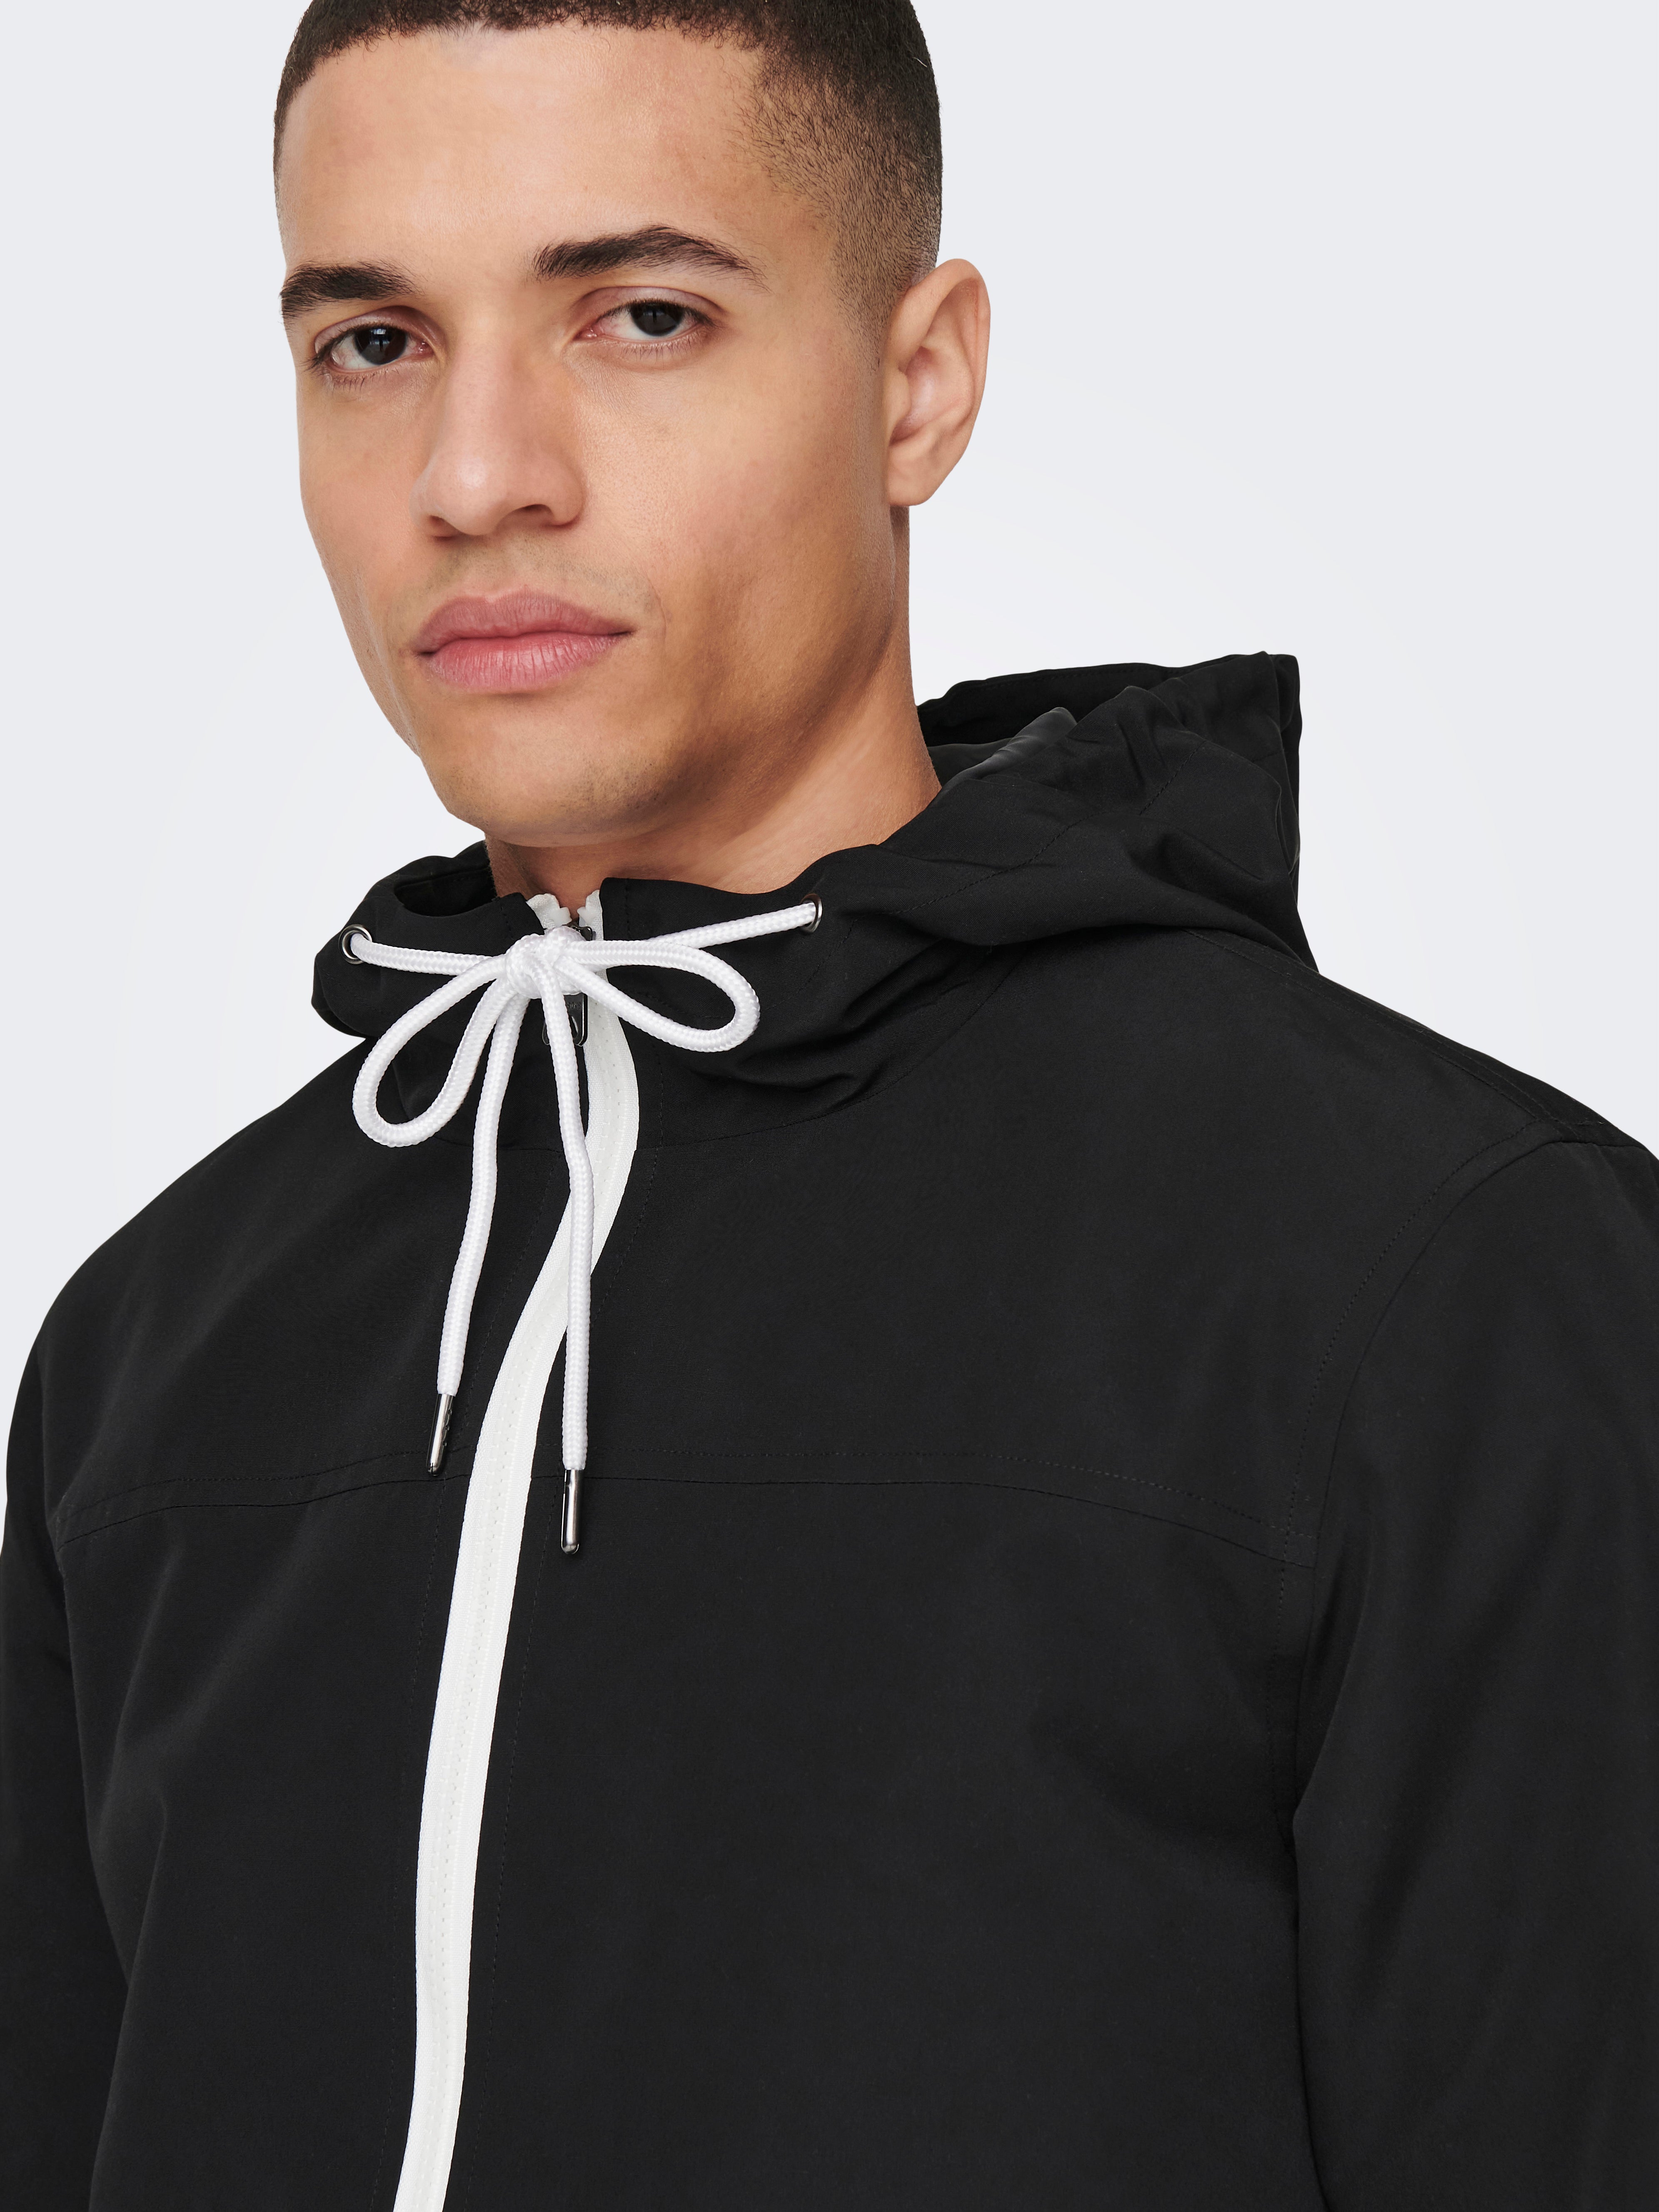 Hood with string regulation Jacket | Black | ONLY & SONS®